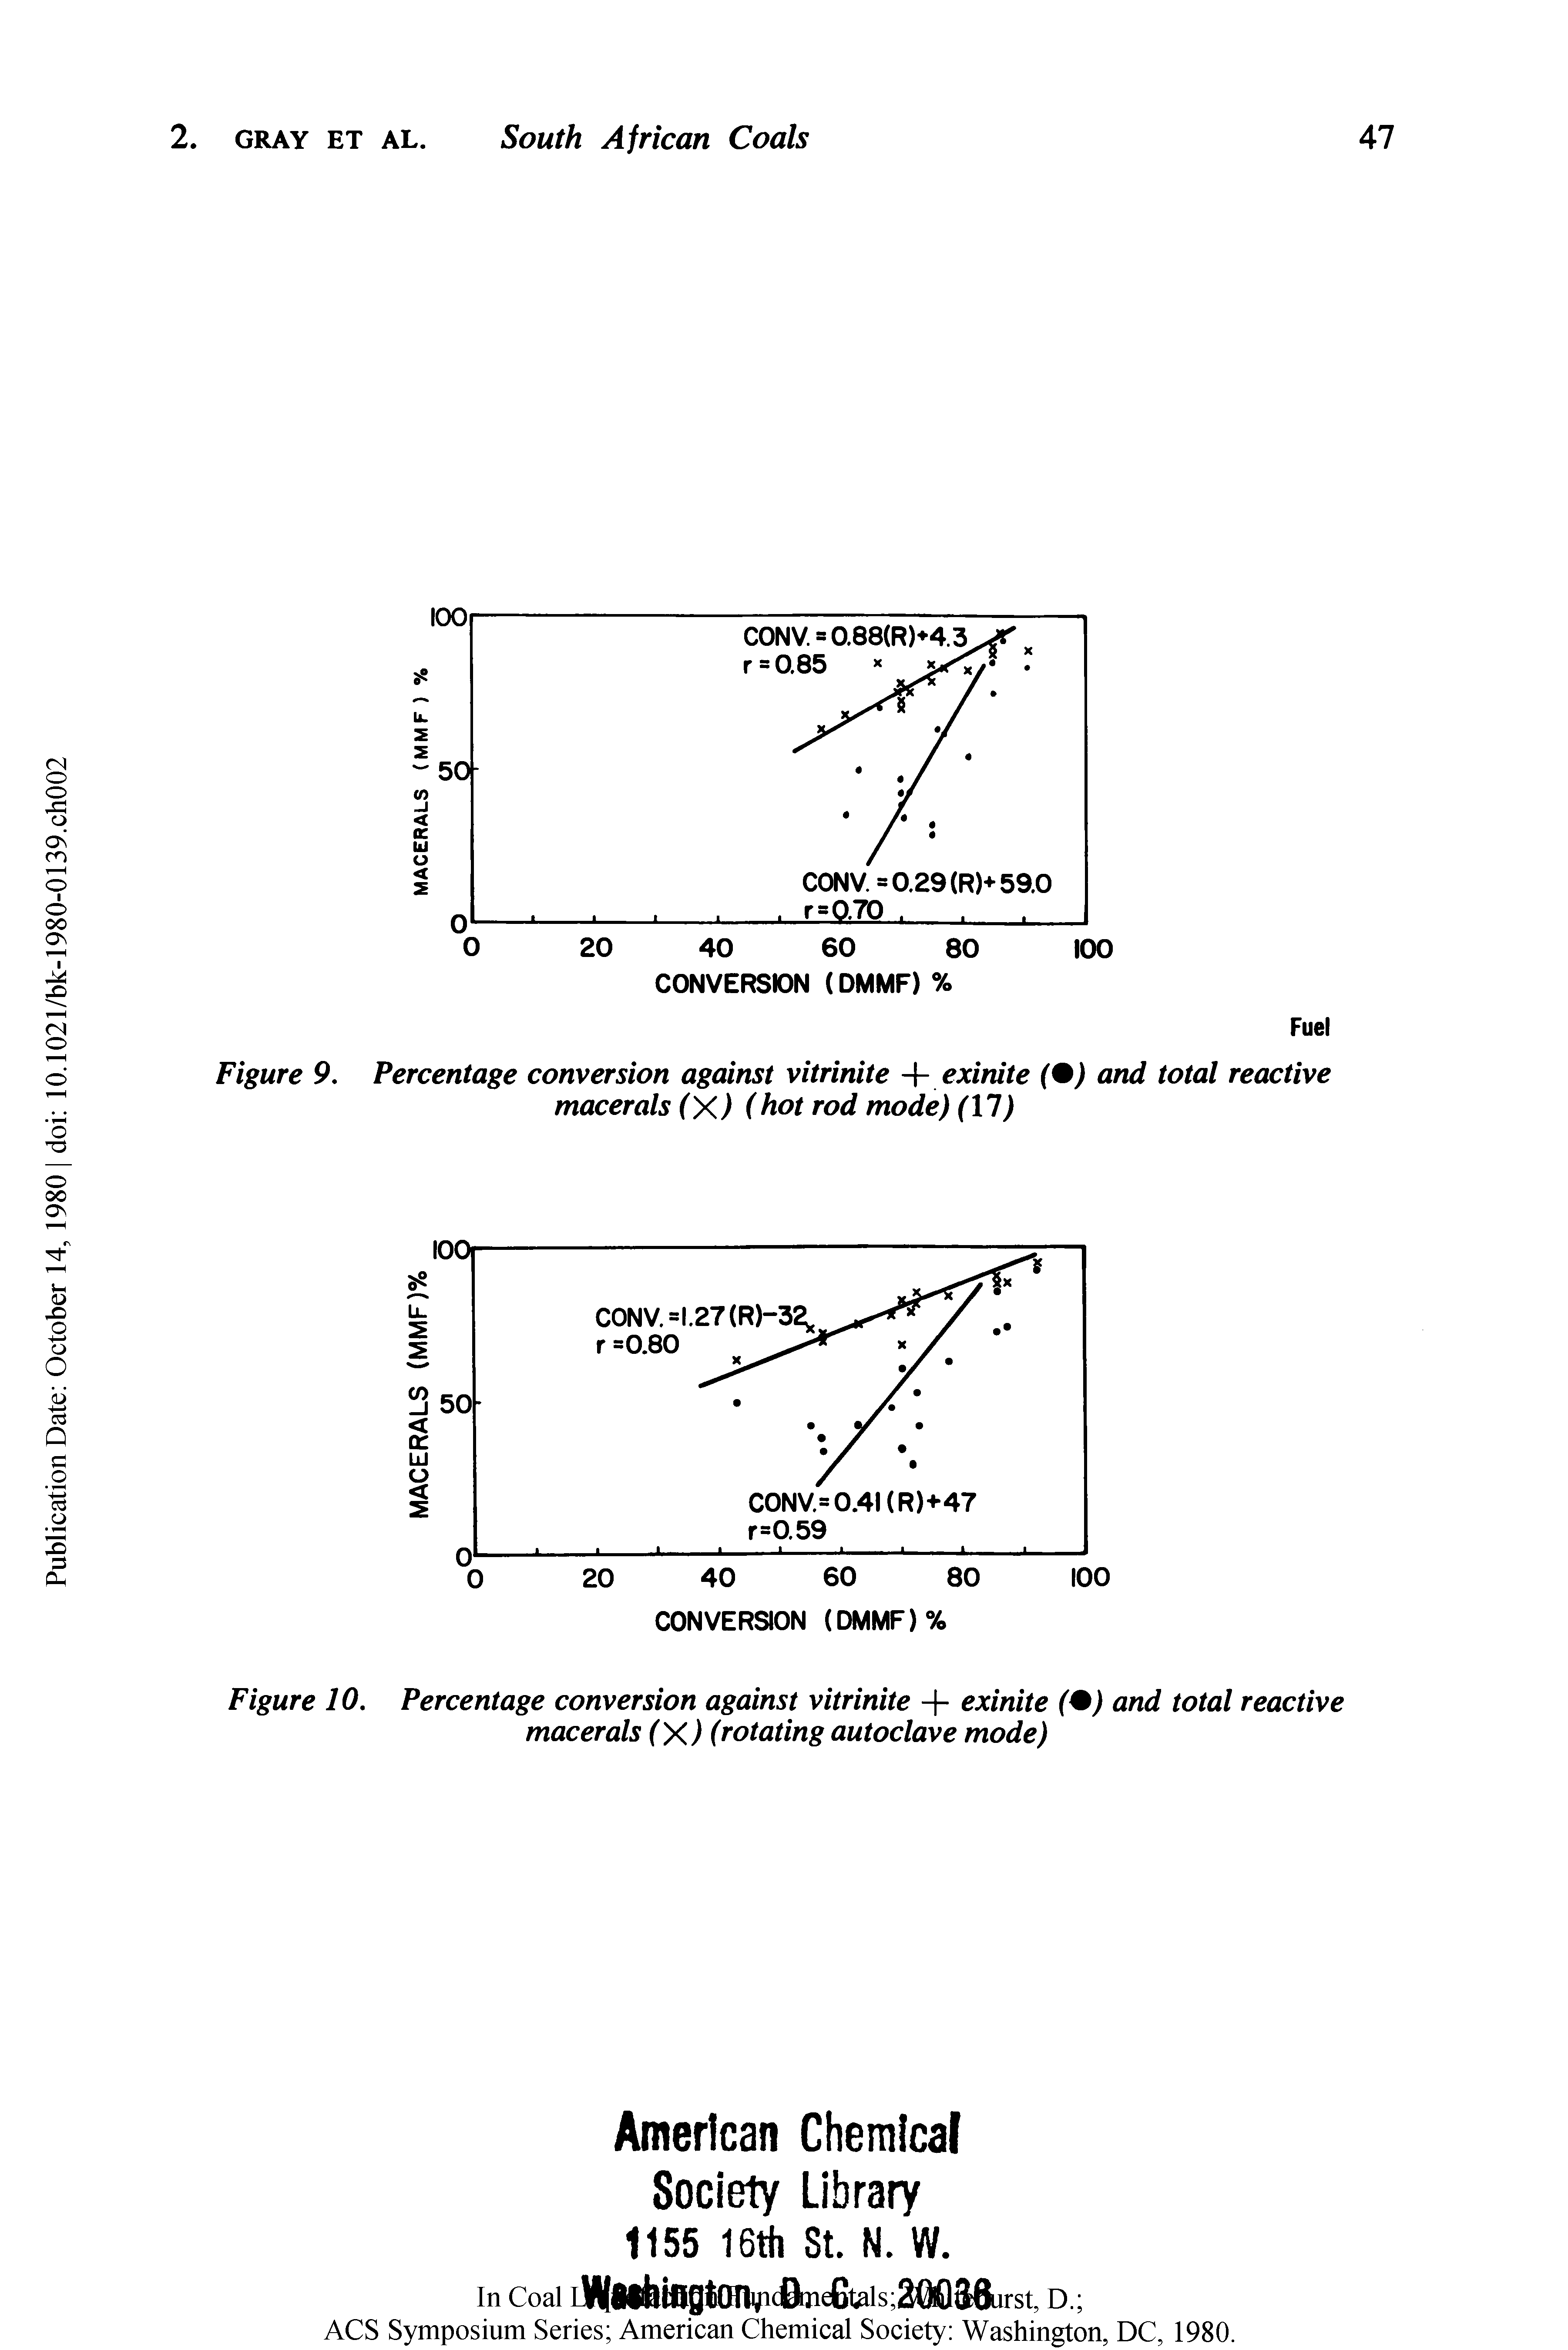 Figure 9. Percentage conversion against vitrinite + exinite (%) and total reactive macerals (X) (hot rod mode) ( 1)...